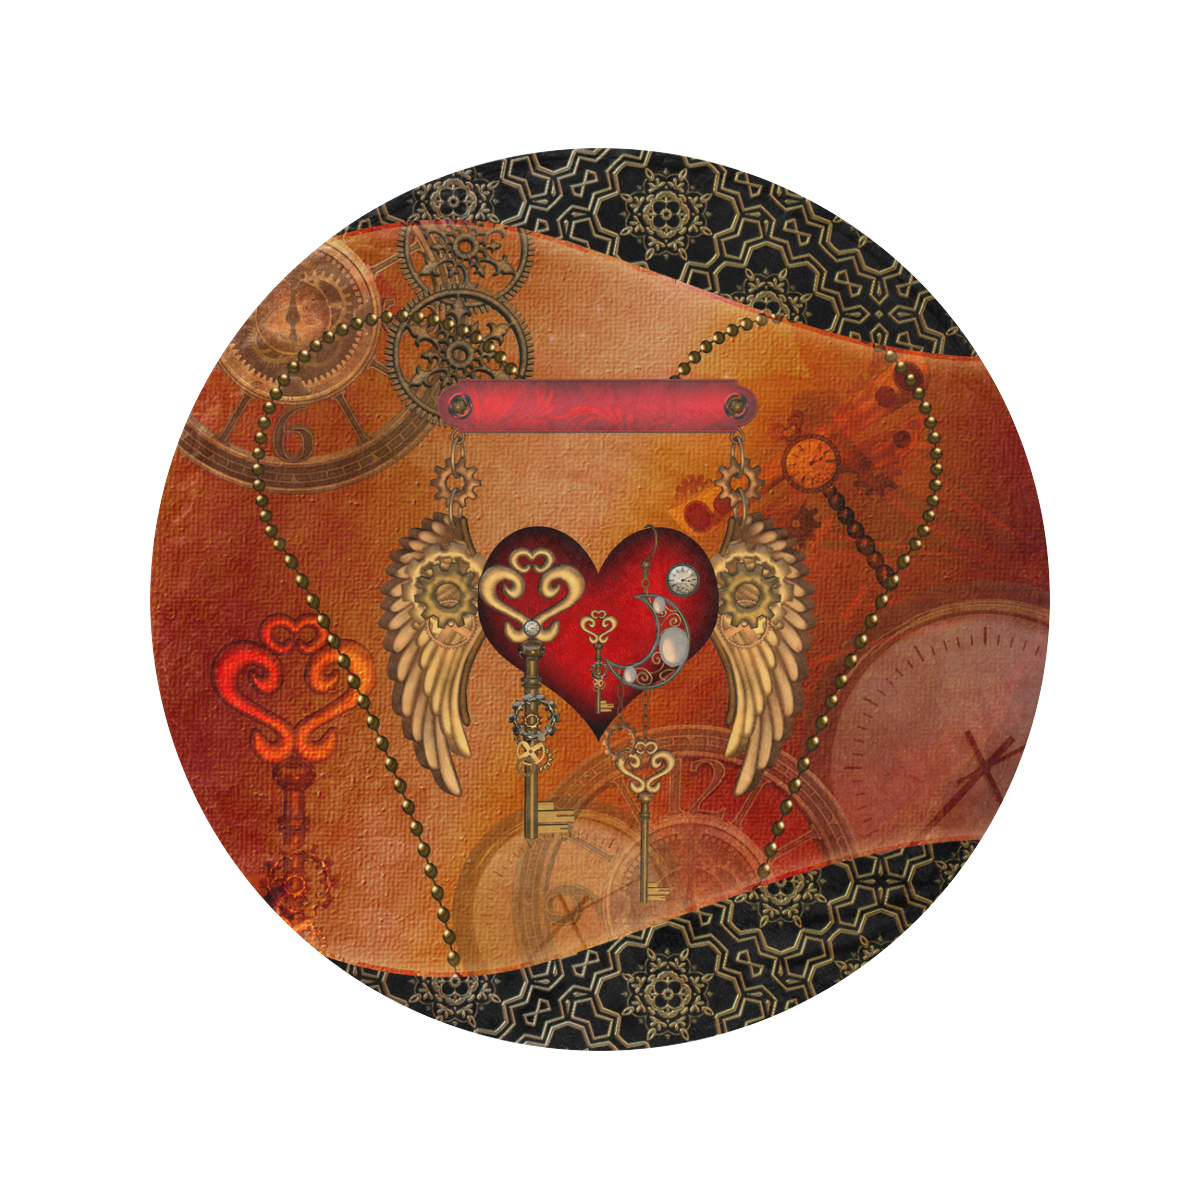 Steampunk, wonderful heart with wings Circular Ultra-Soft Micro Fleece Blanket 60"